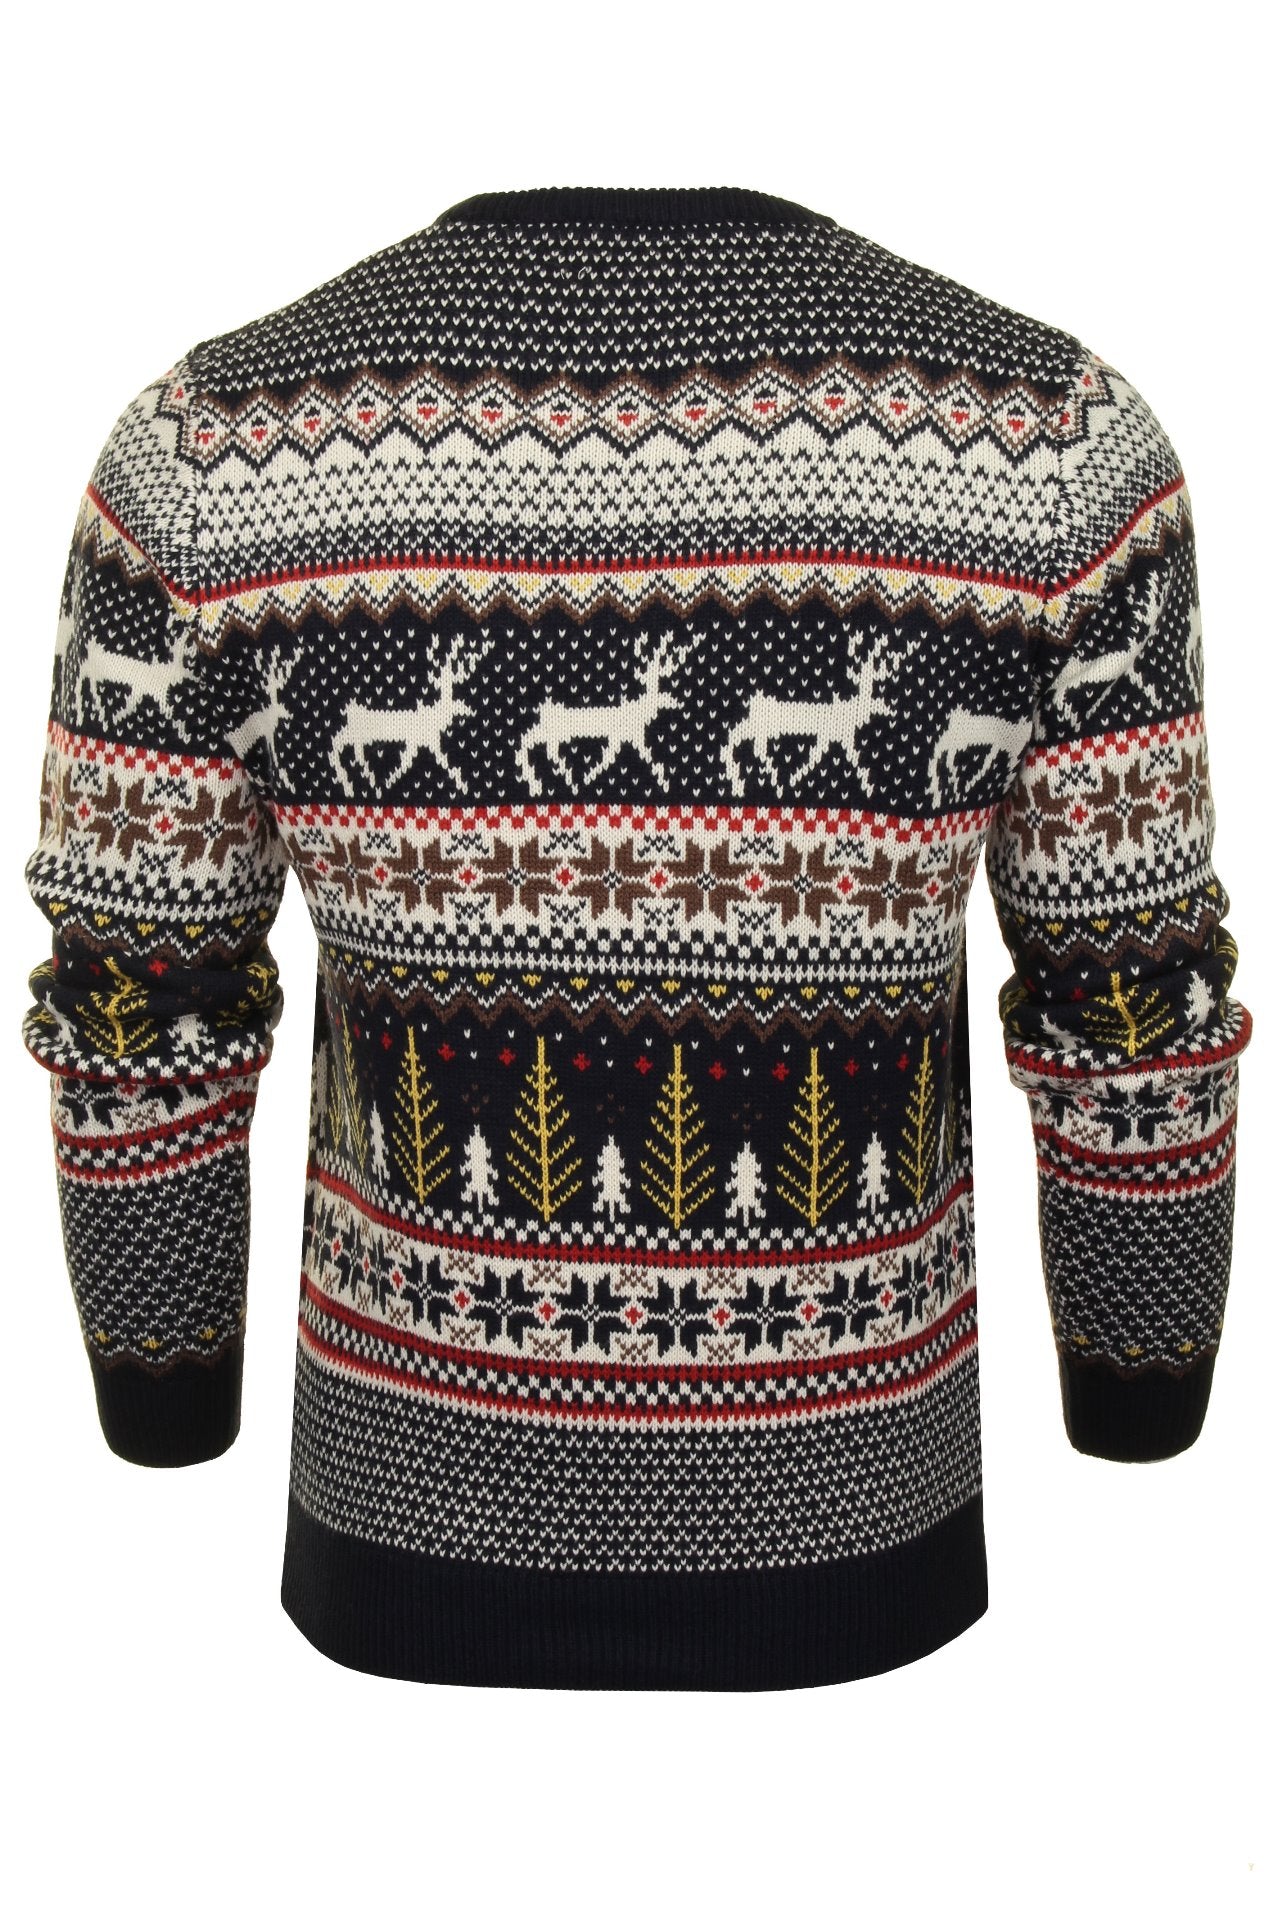 Xact Christmas/ Xmas Jumper 'Lapland' with Tree & Reindeer Fairisle Pattern-3